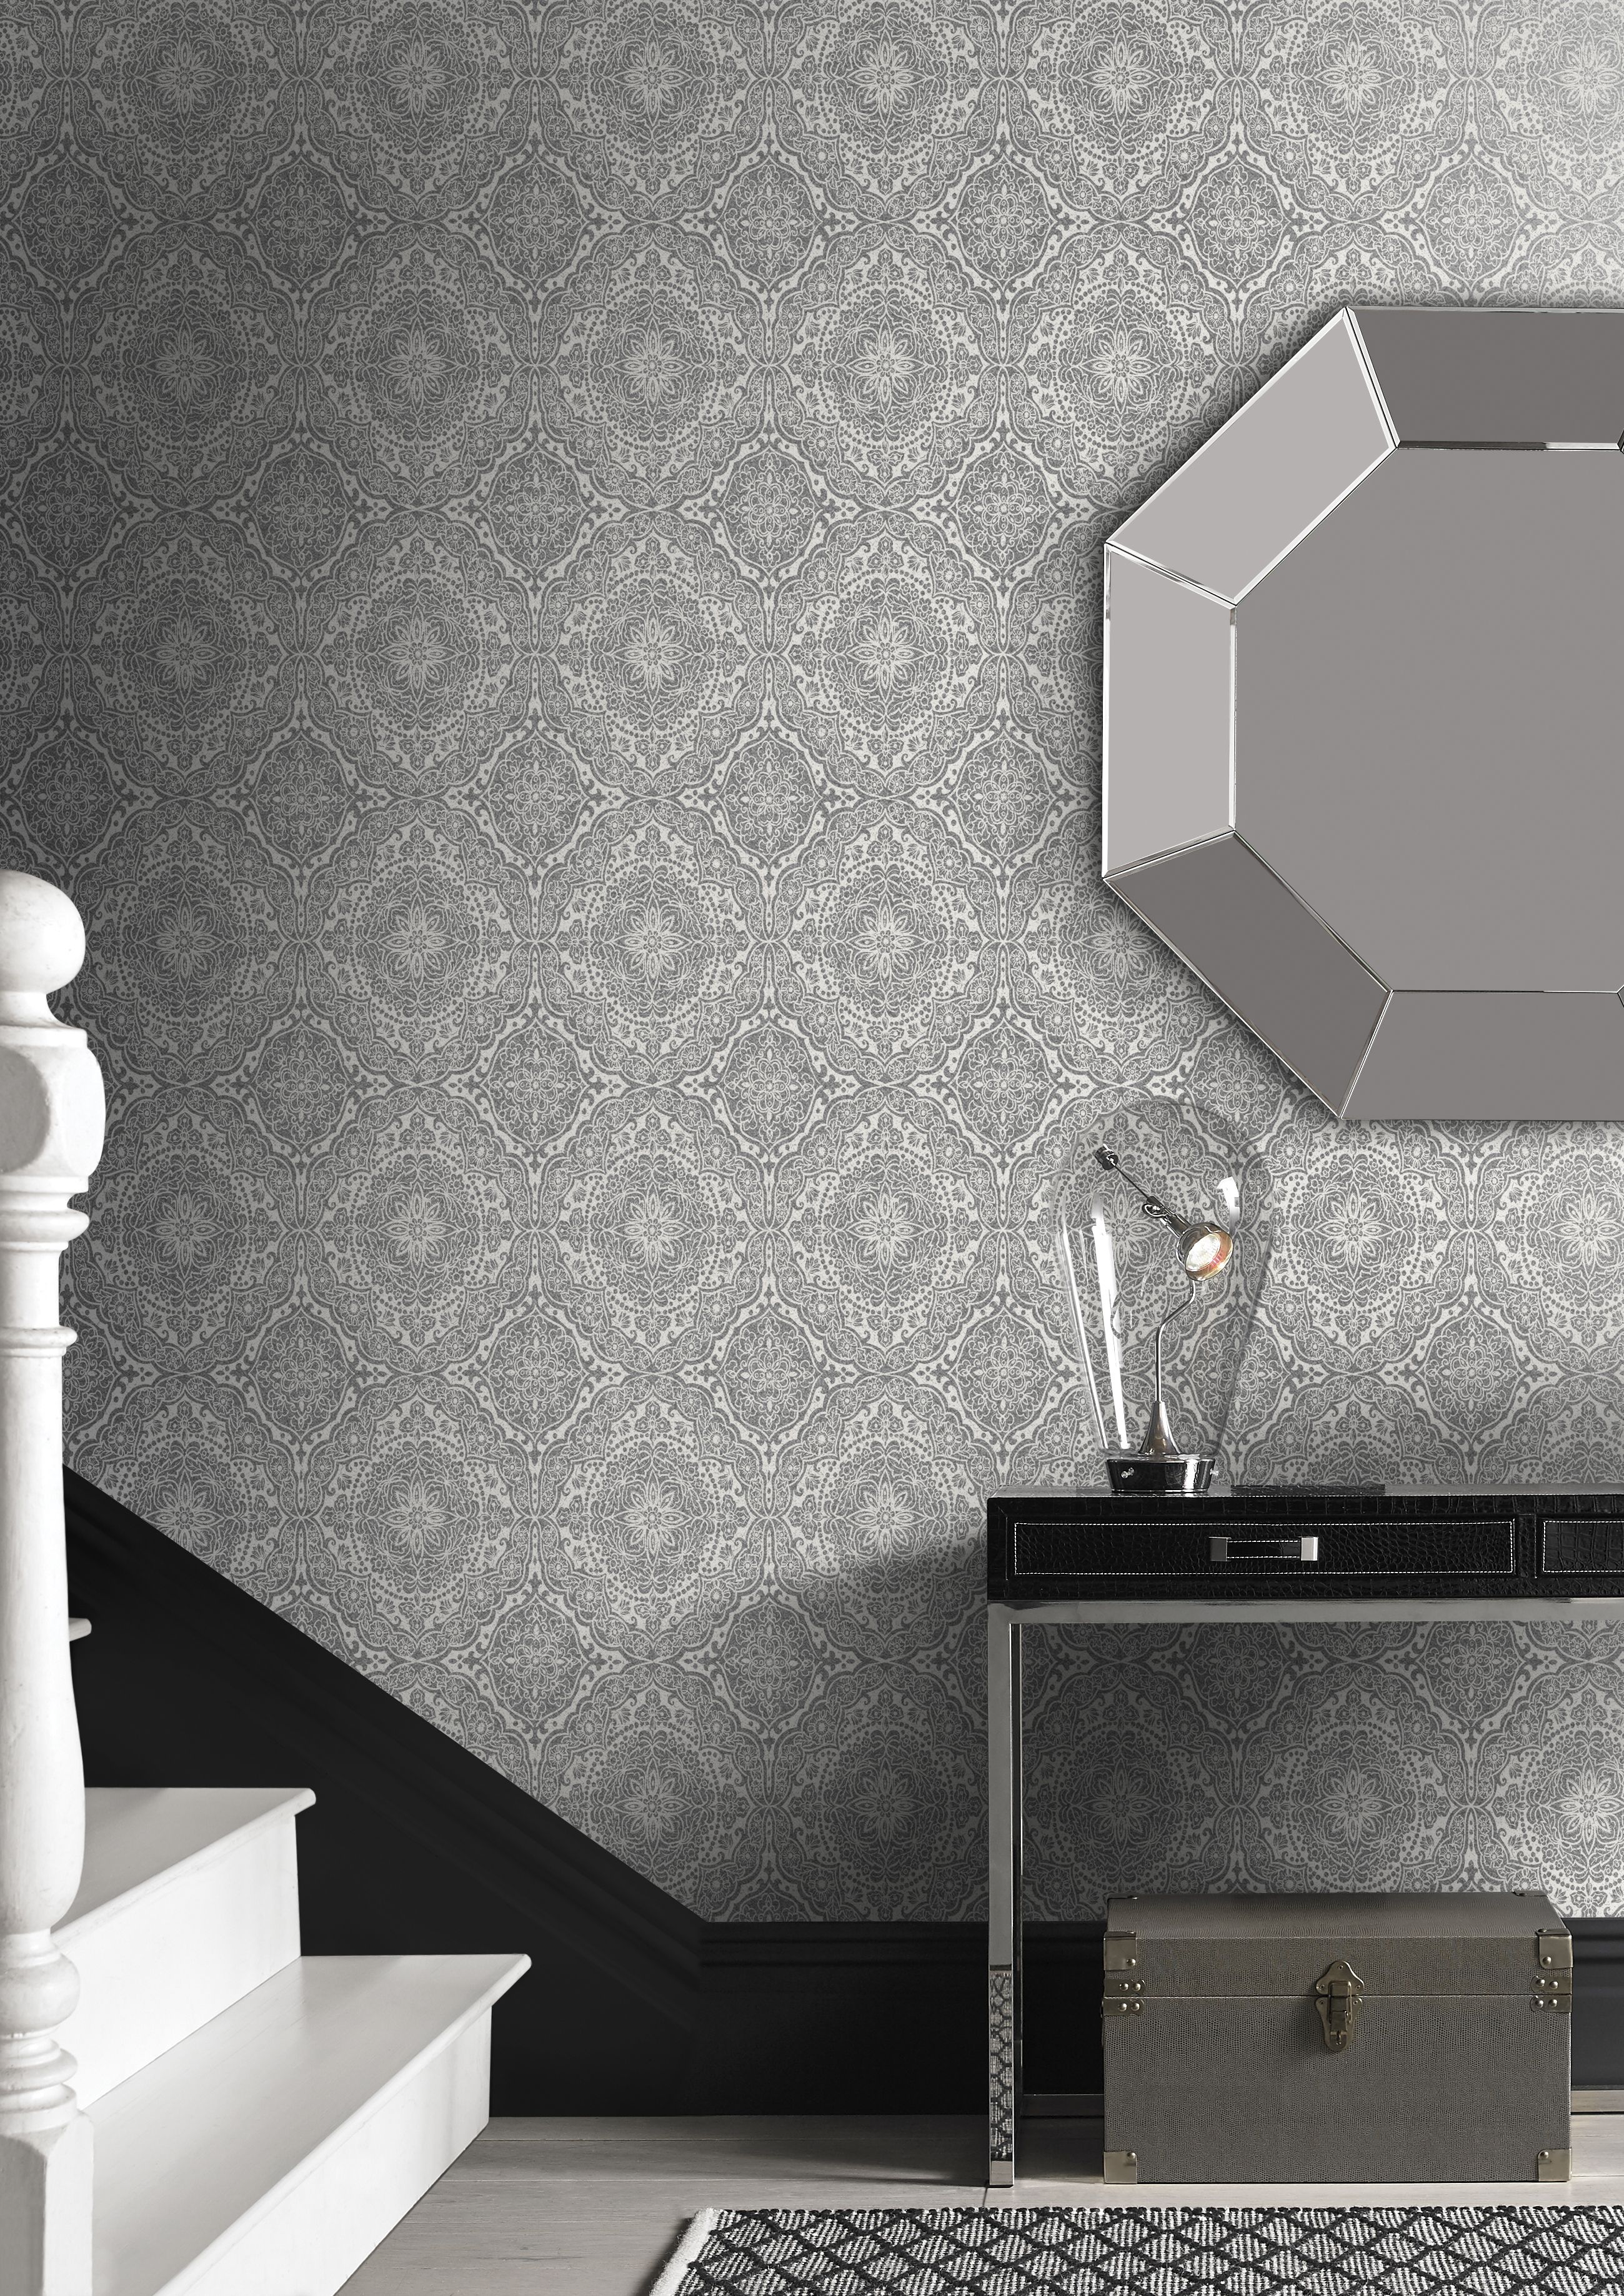 range wallpaper designs,wall,tile,wallpaper,room,interior design